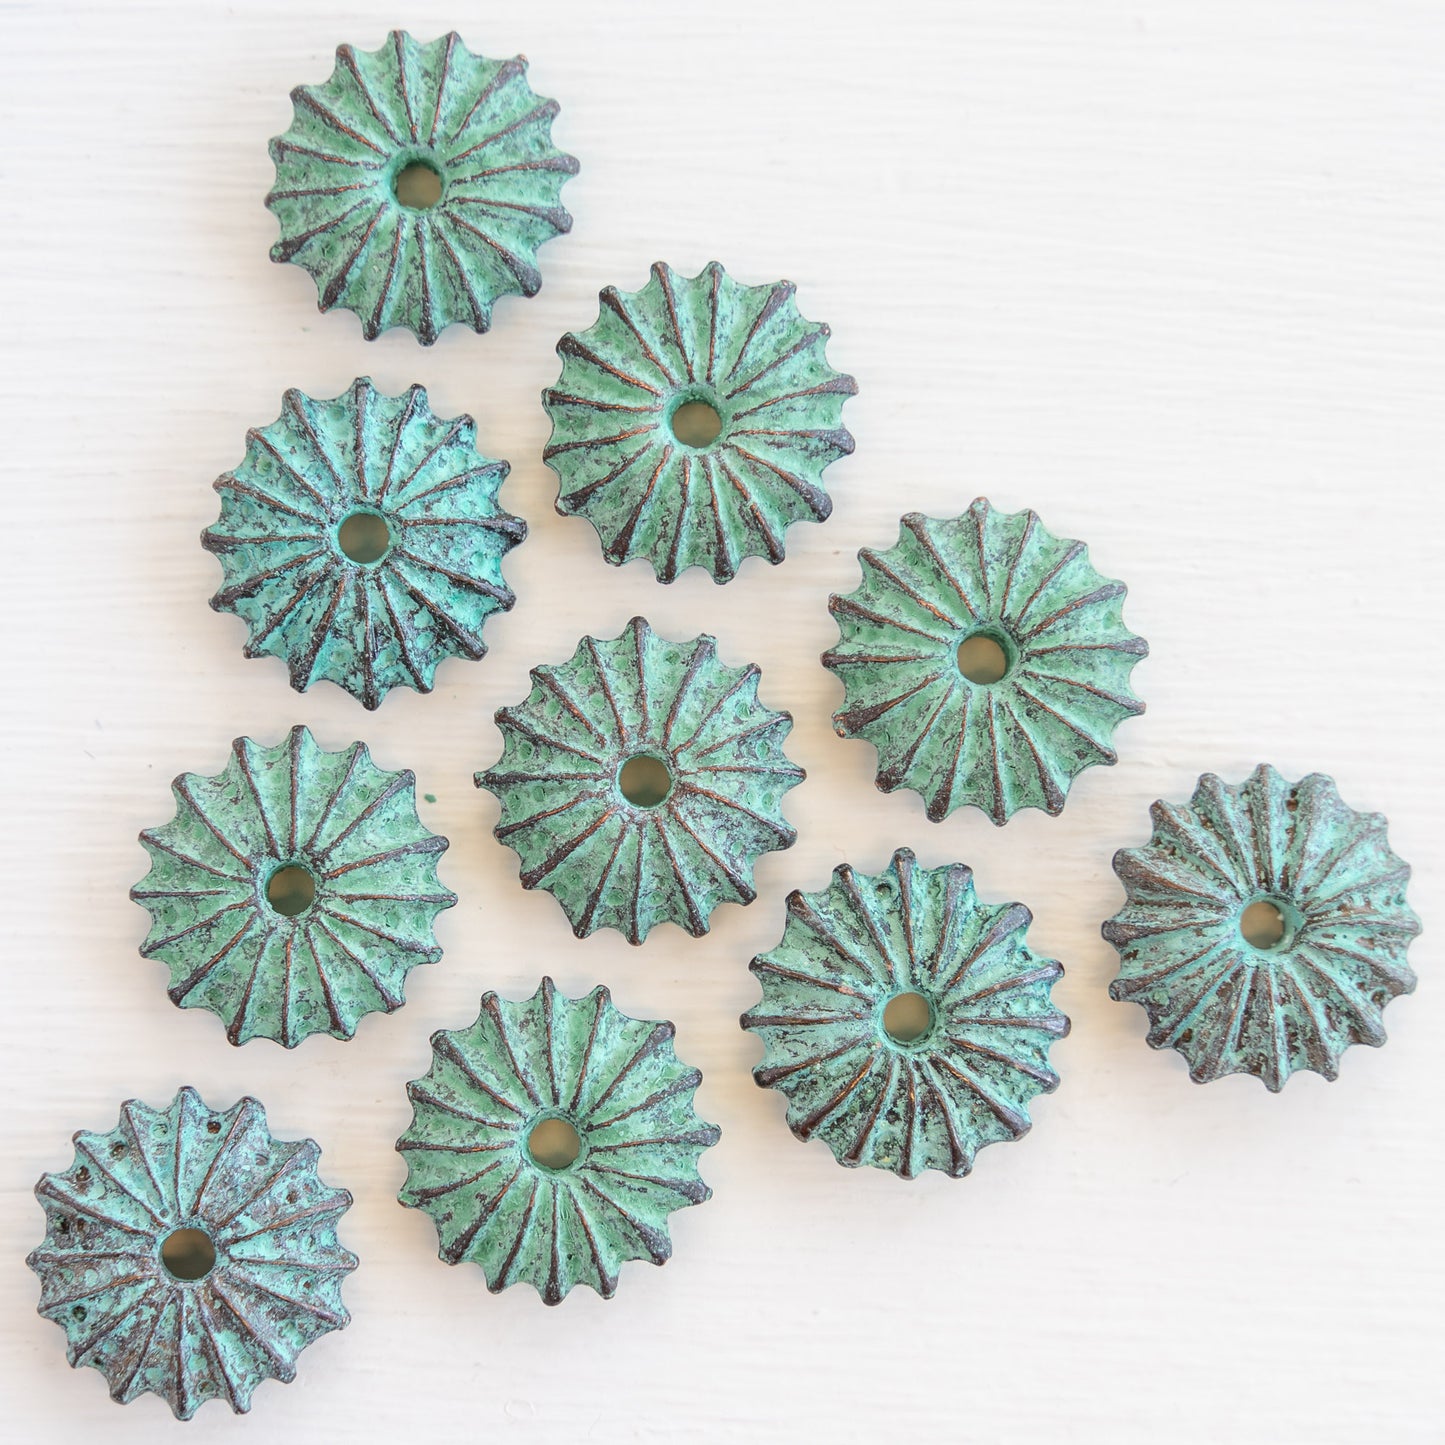 2-4mm Metal Coated Ceramic Seed Beads - Green Patina - Choose